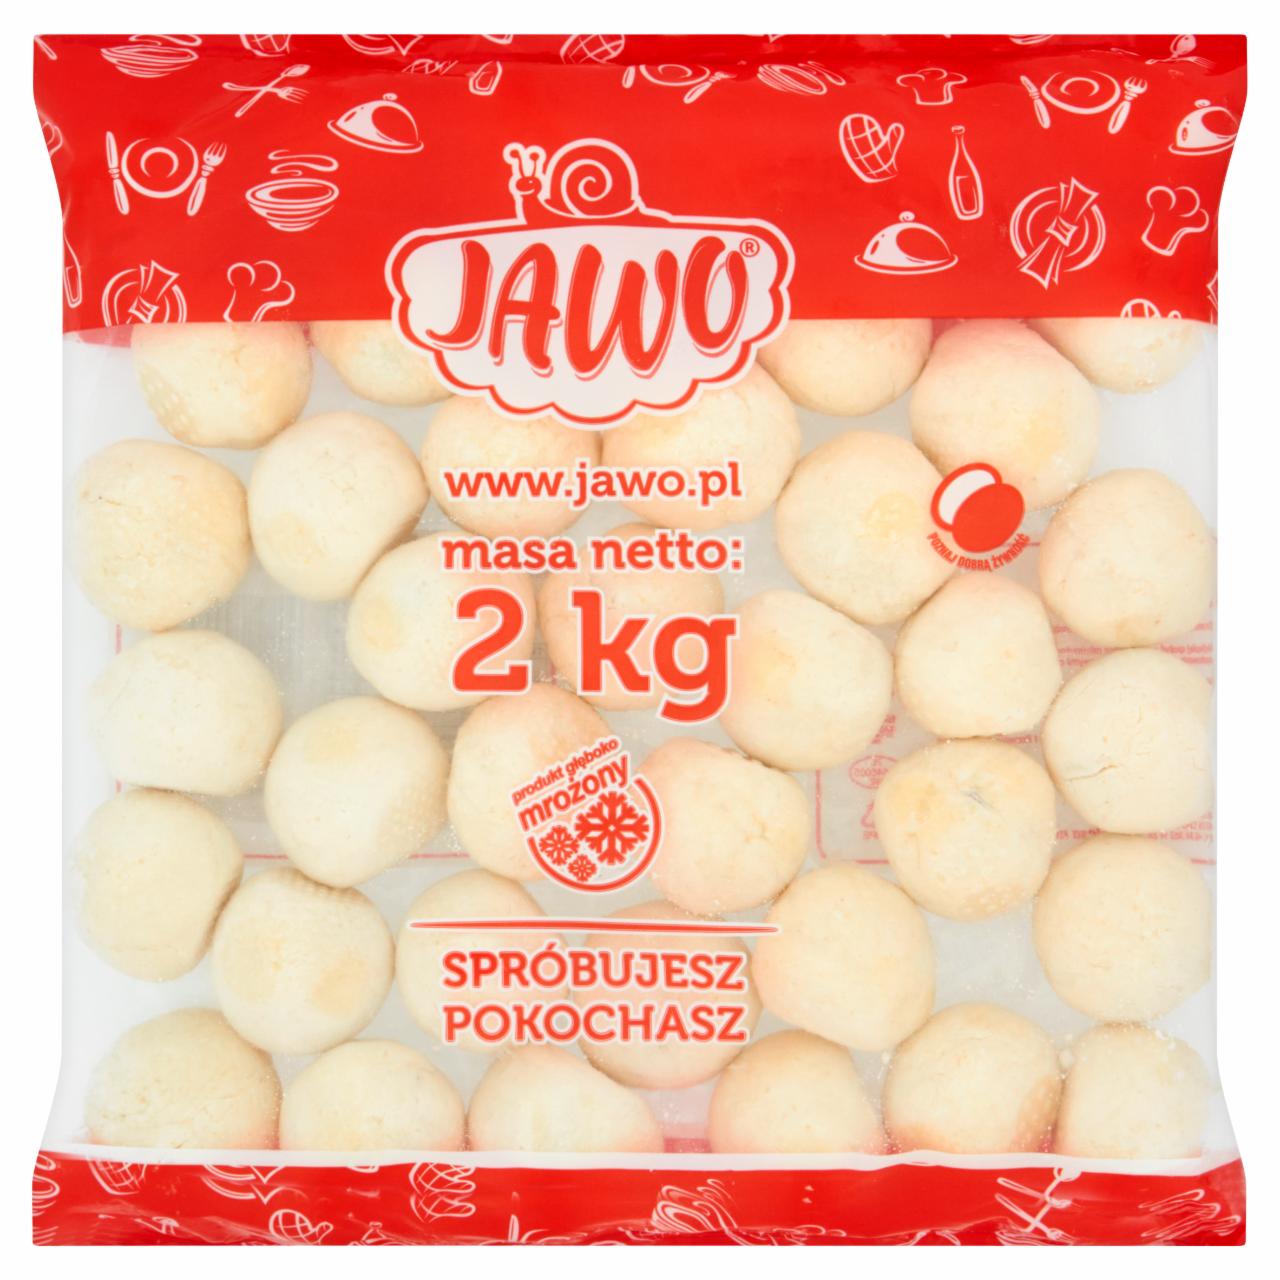 Photo - Jawo Dumplings with Strawberries 2 kg